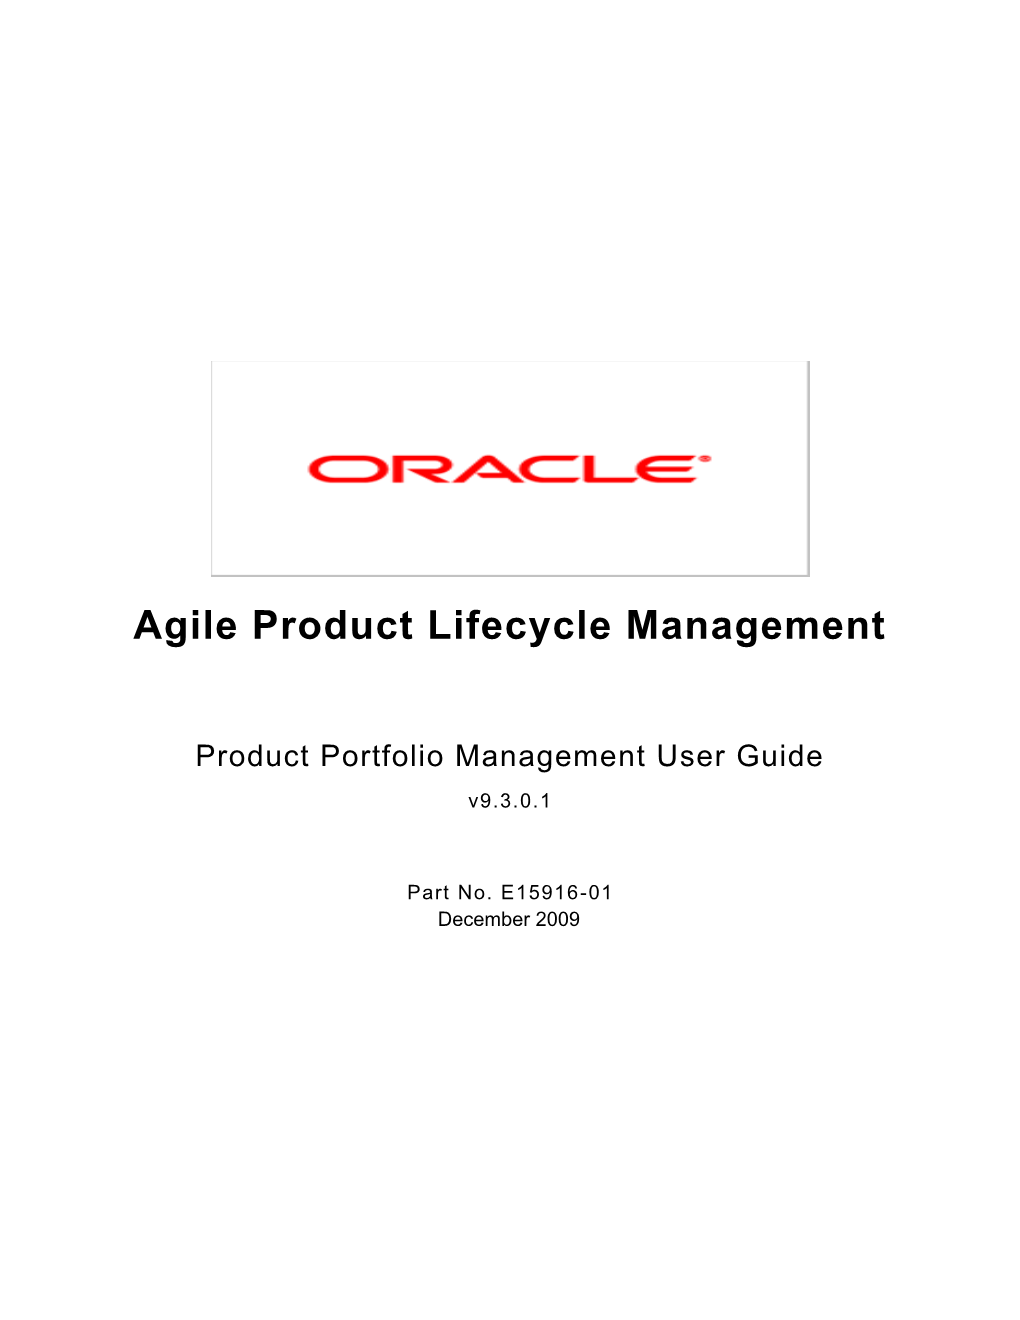 Product Portfolio Management User Guide V9.3.0.1